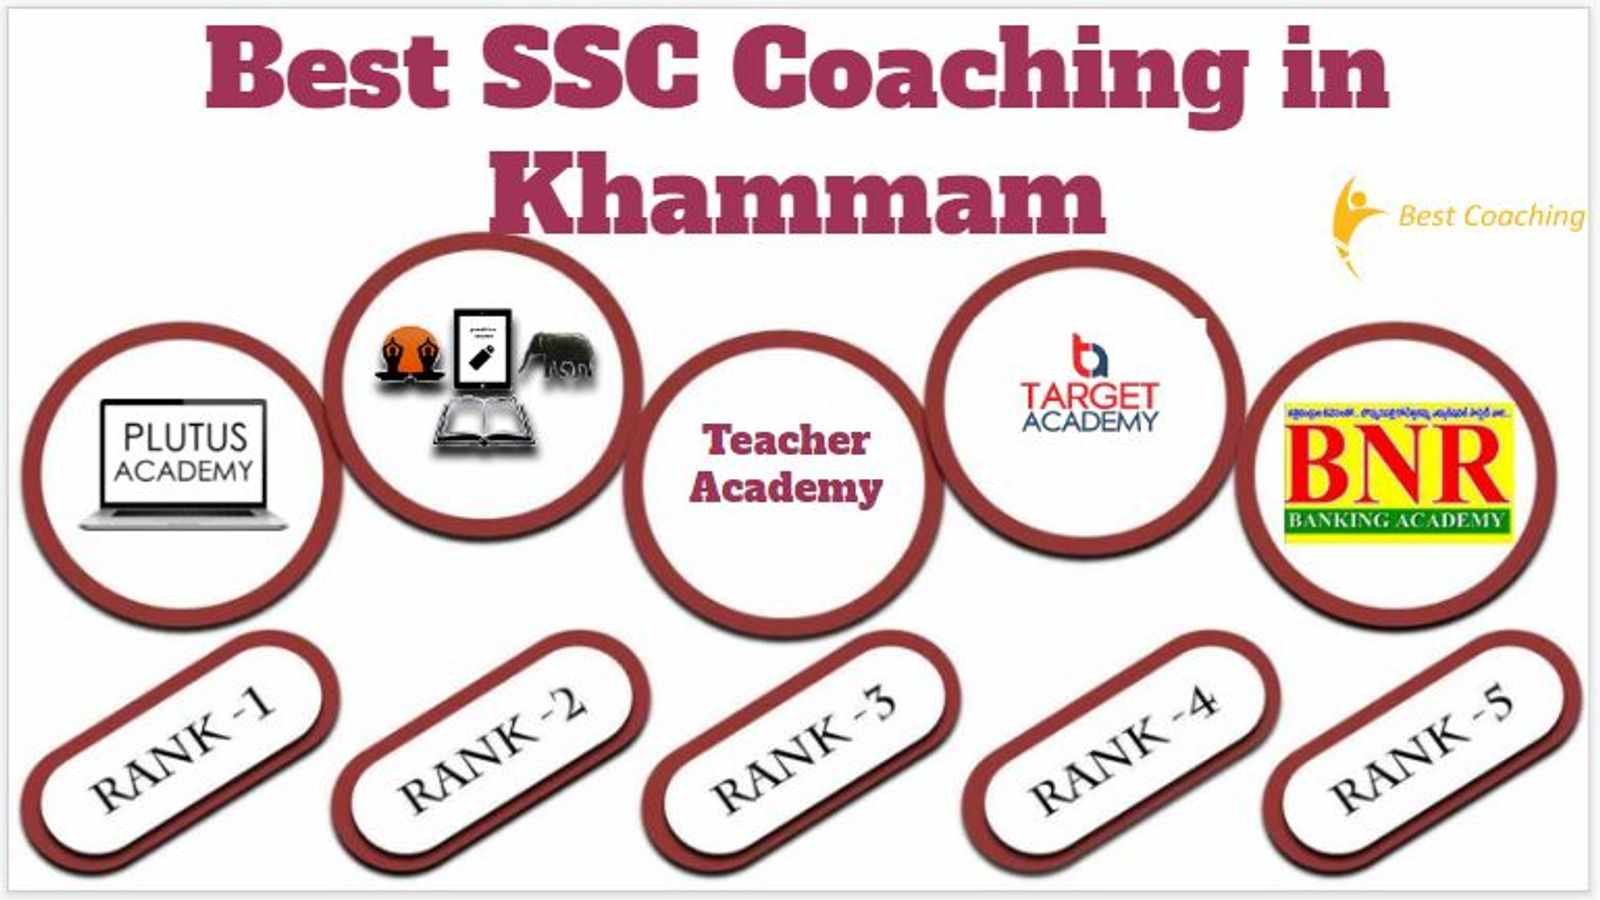 Best SSC Coaching in Khammam